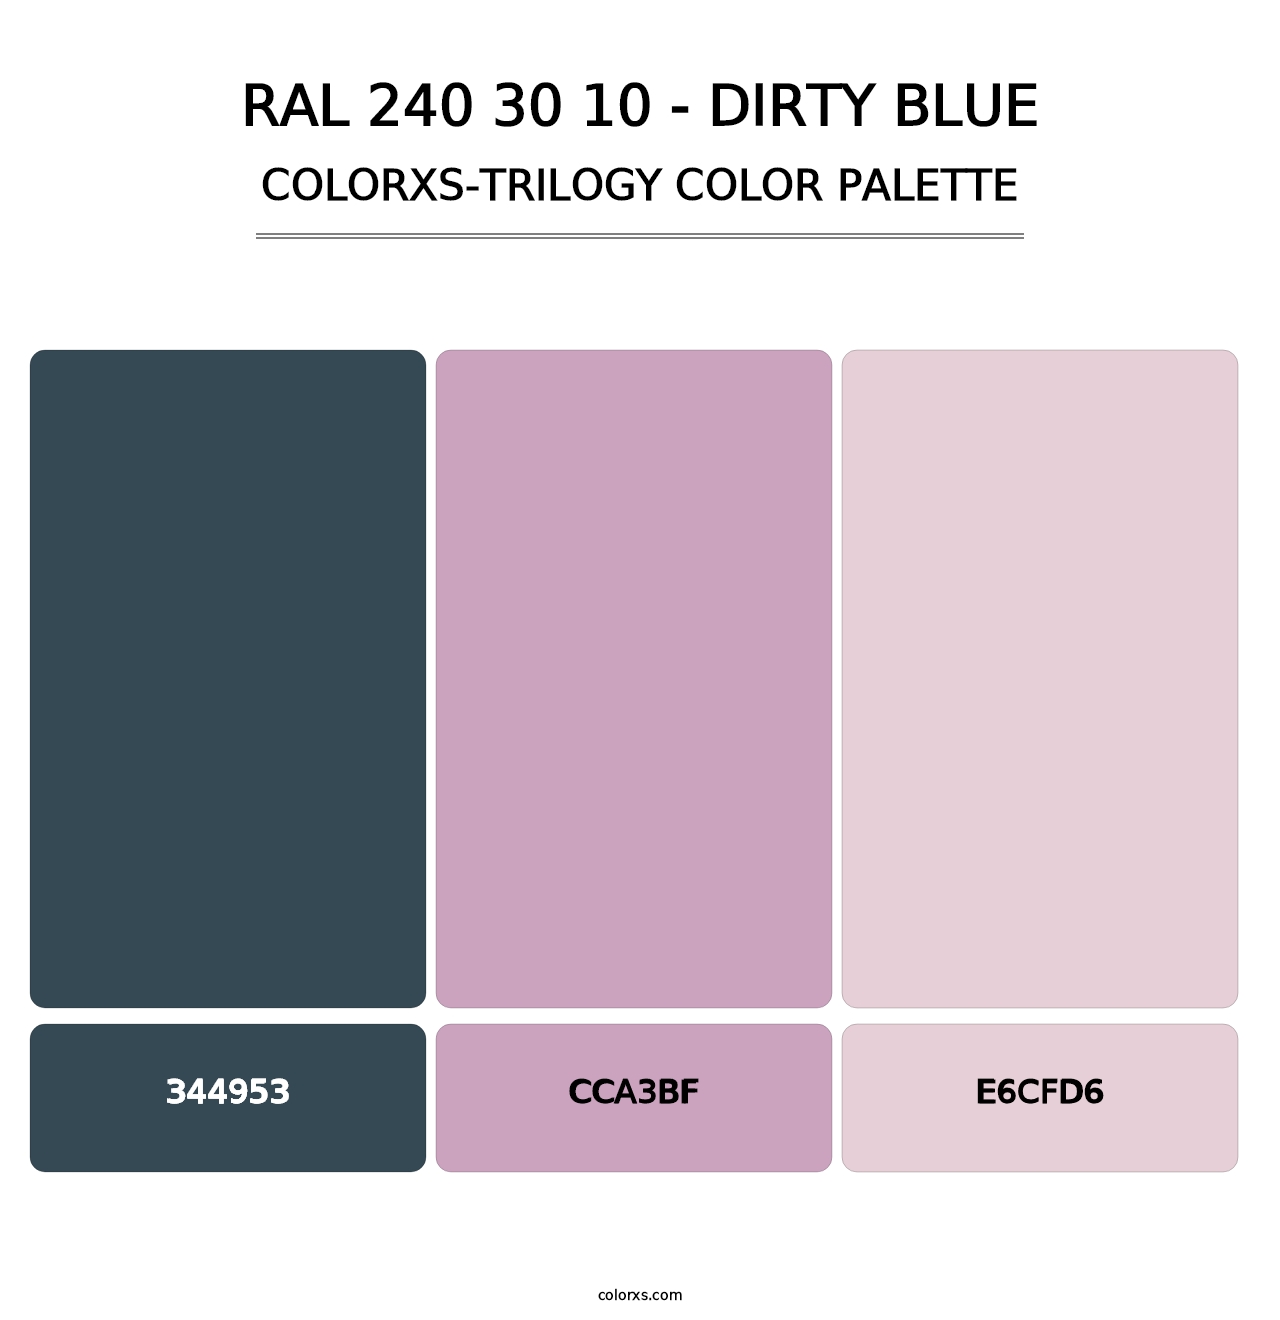 RAL 240 30 10 - Dirty Blue - Colorxs Trilogy Palette